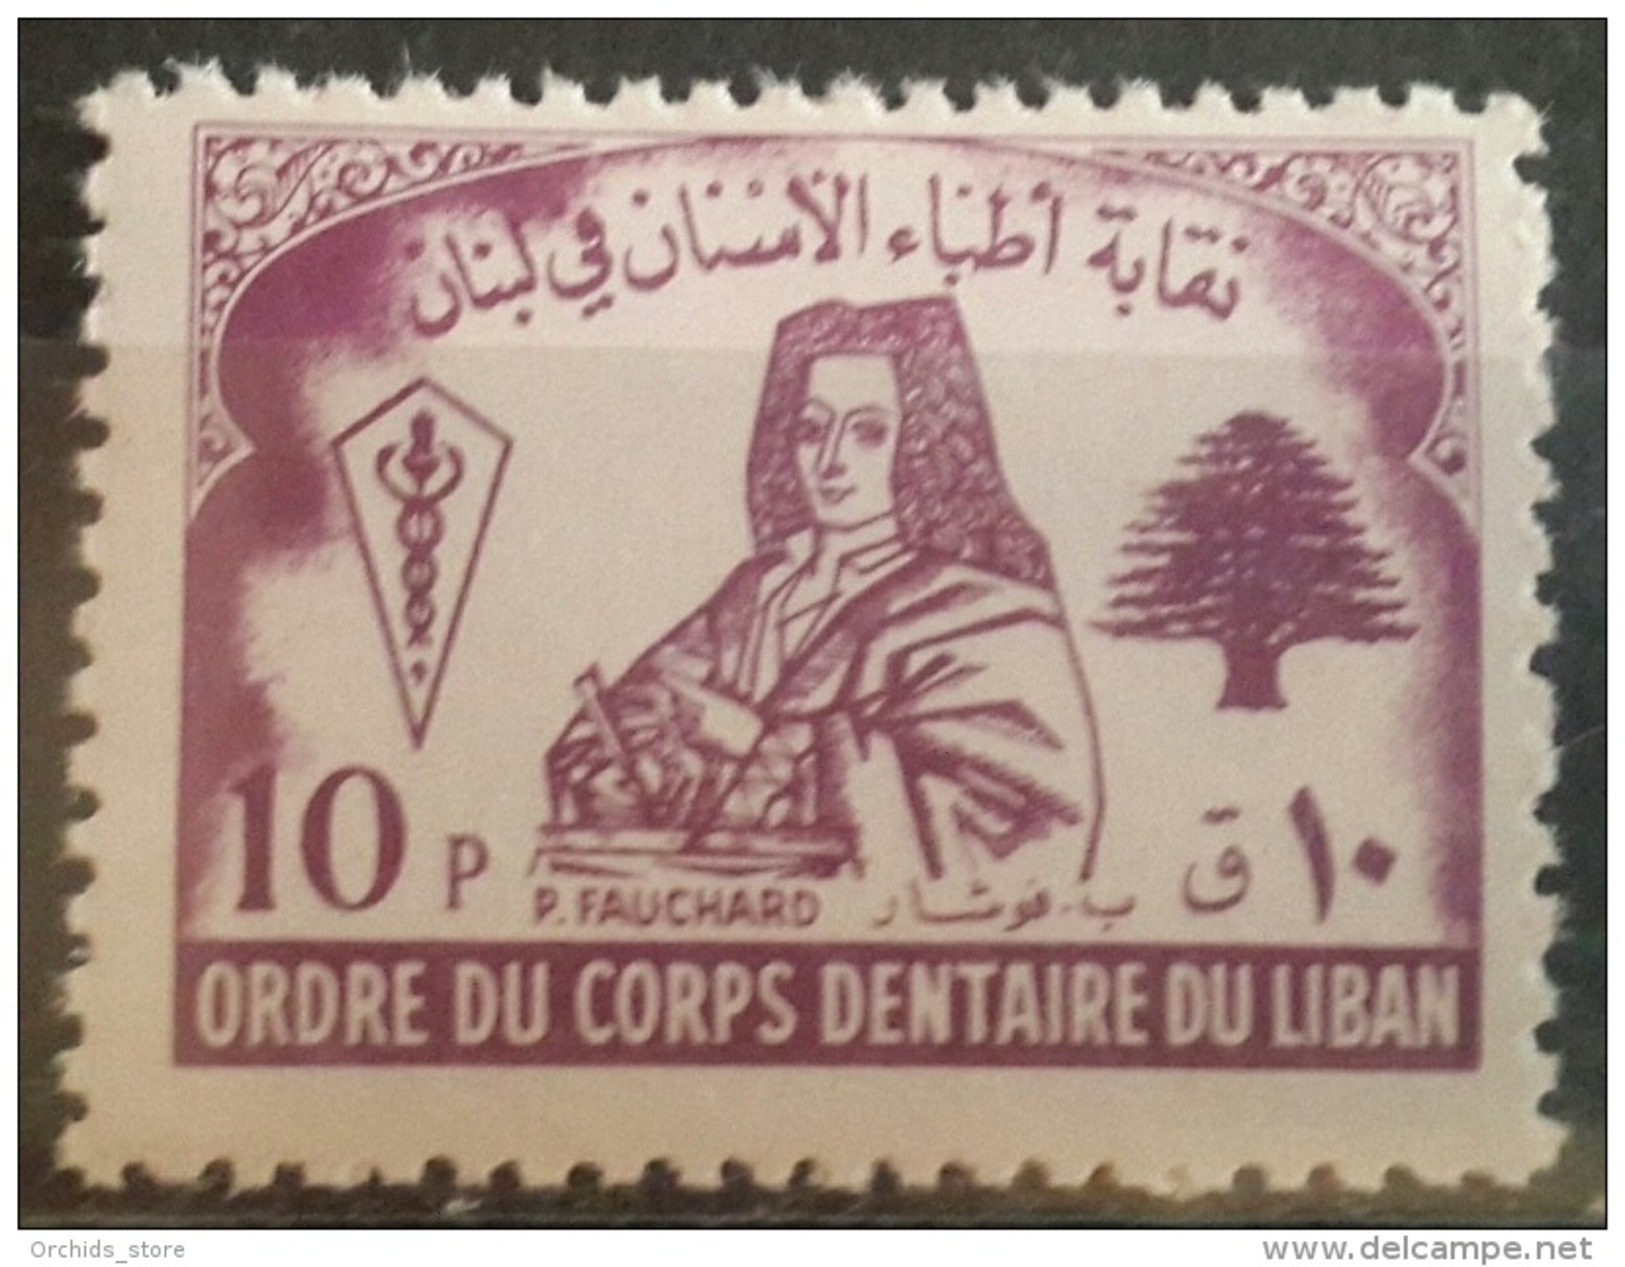 Lebanon 1970s Dentists Revenue Stamp 10p MNH - P. FAUCHARD - Lebanon